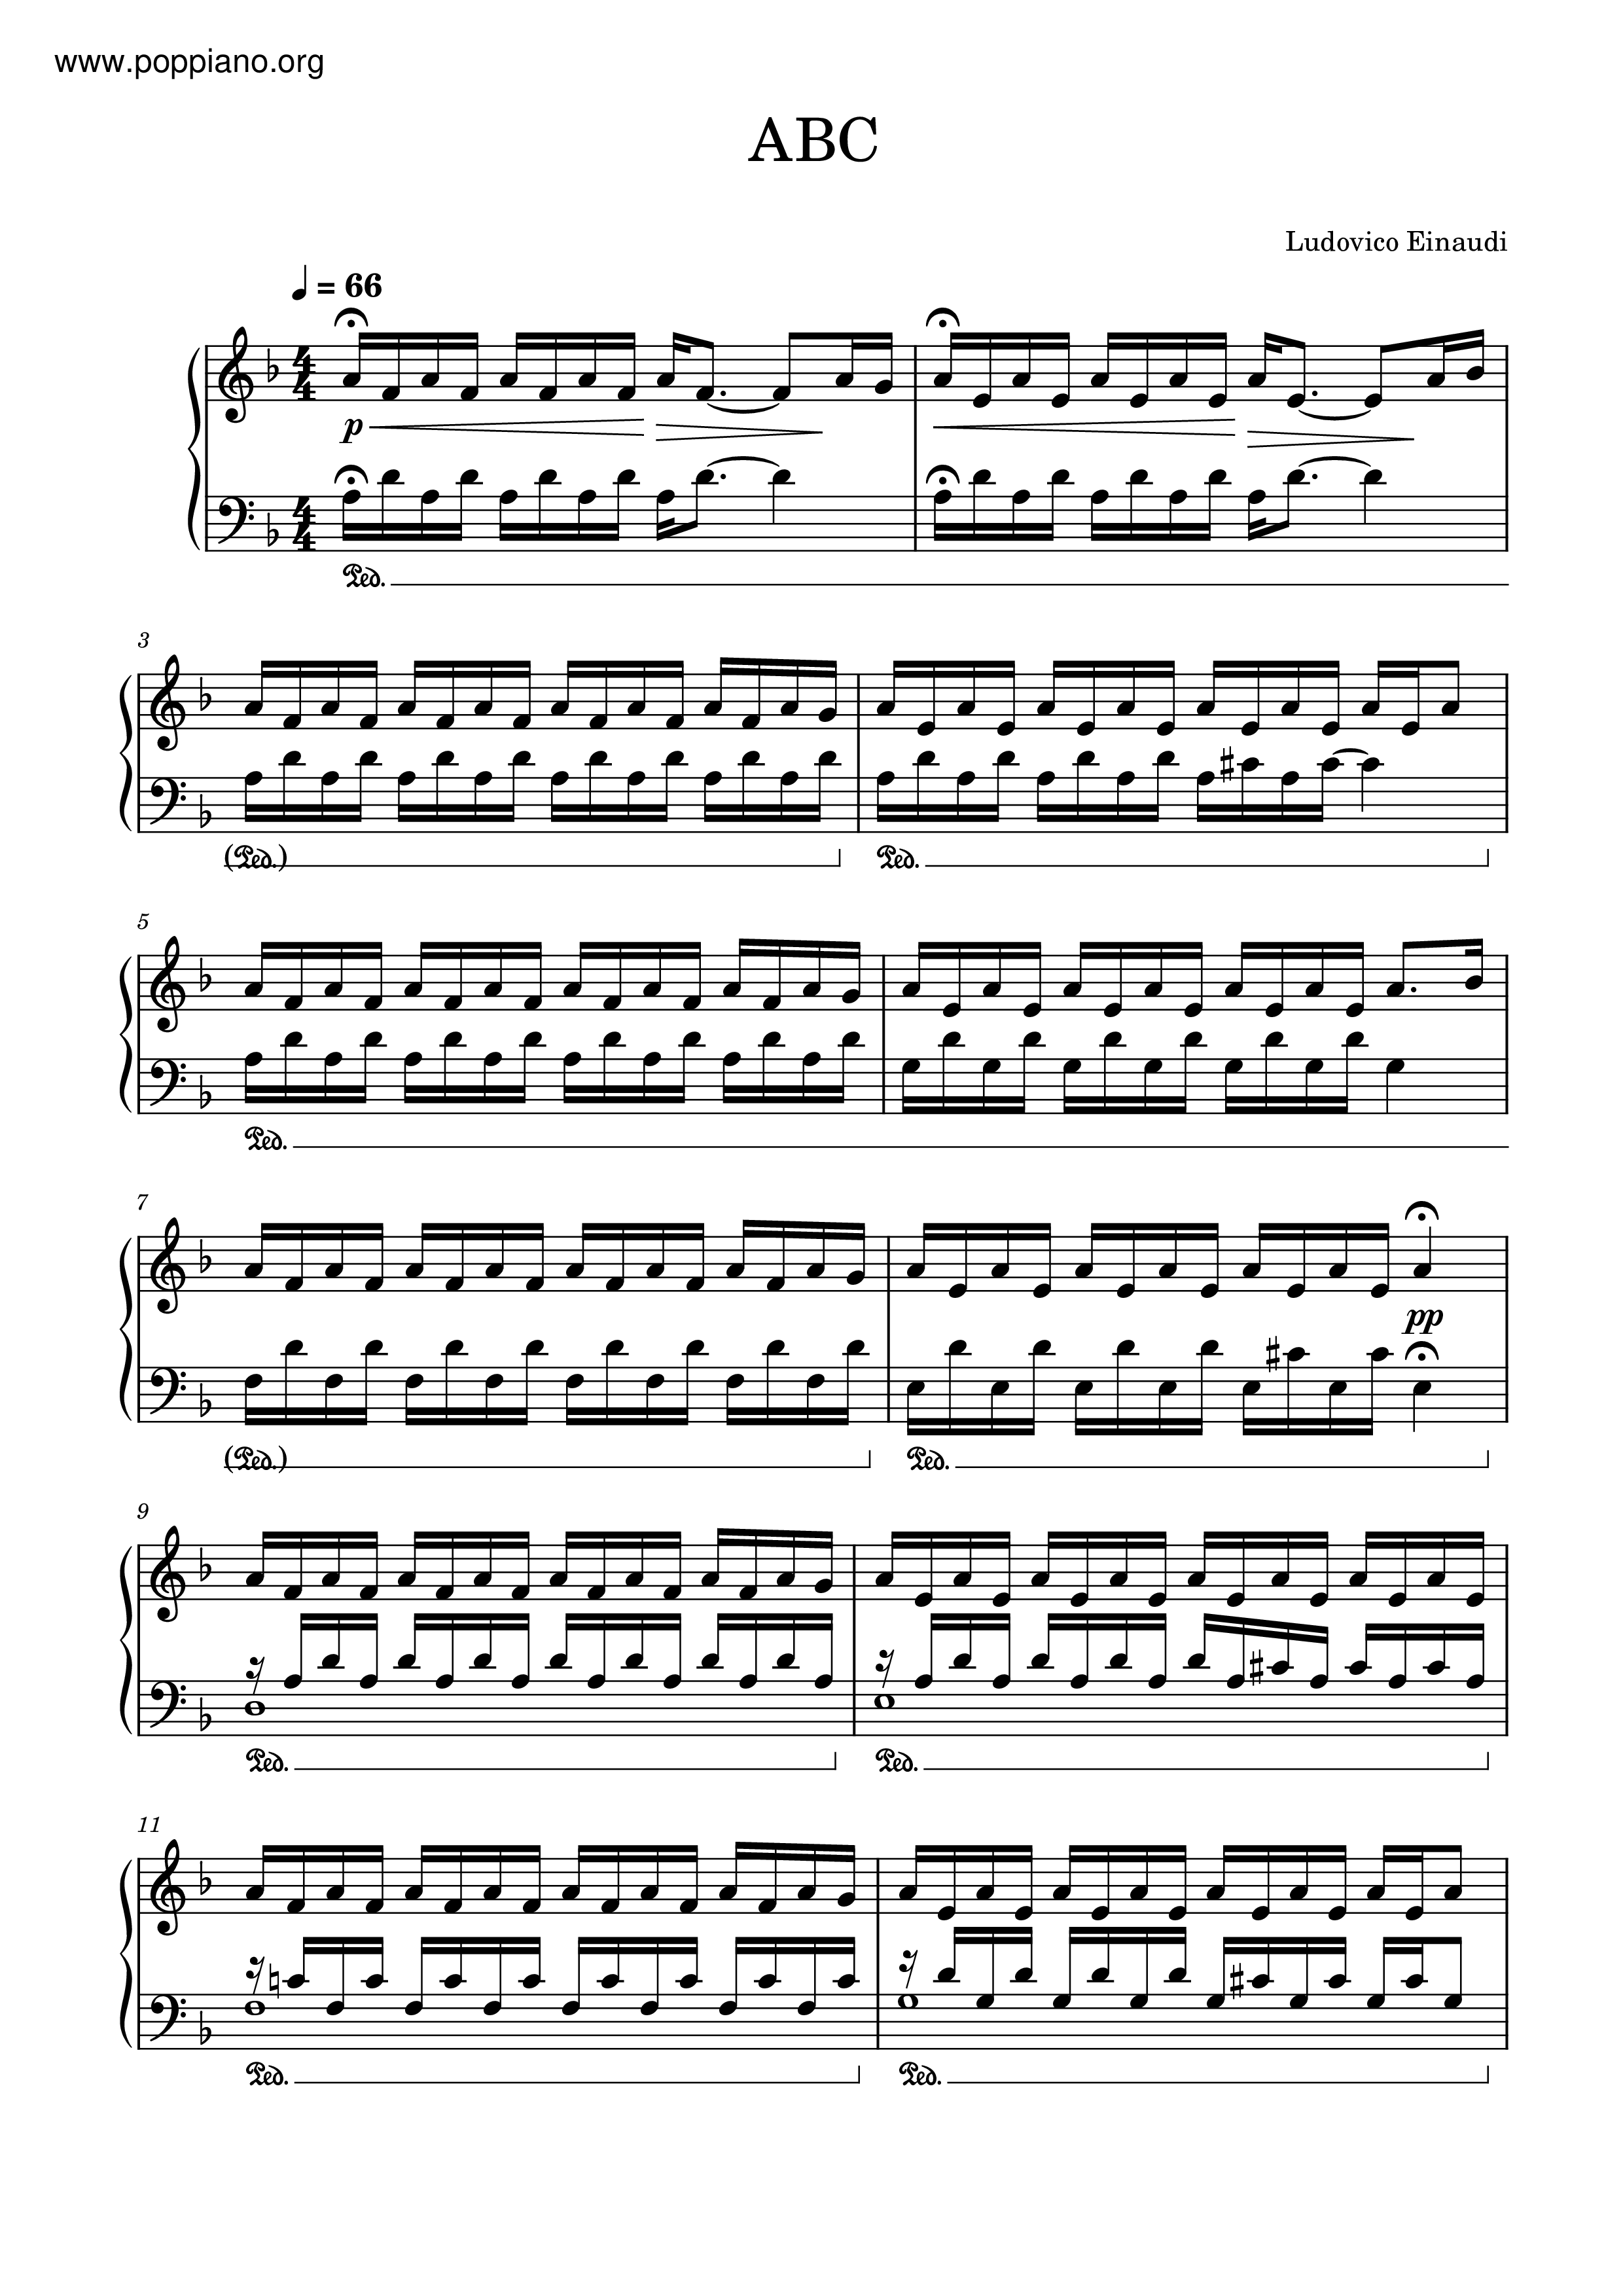 ☆ Ludovico Einaudi-Abc Sheet Music Pdf, - Free Score Download ☆